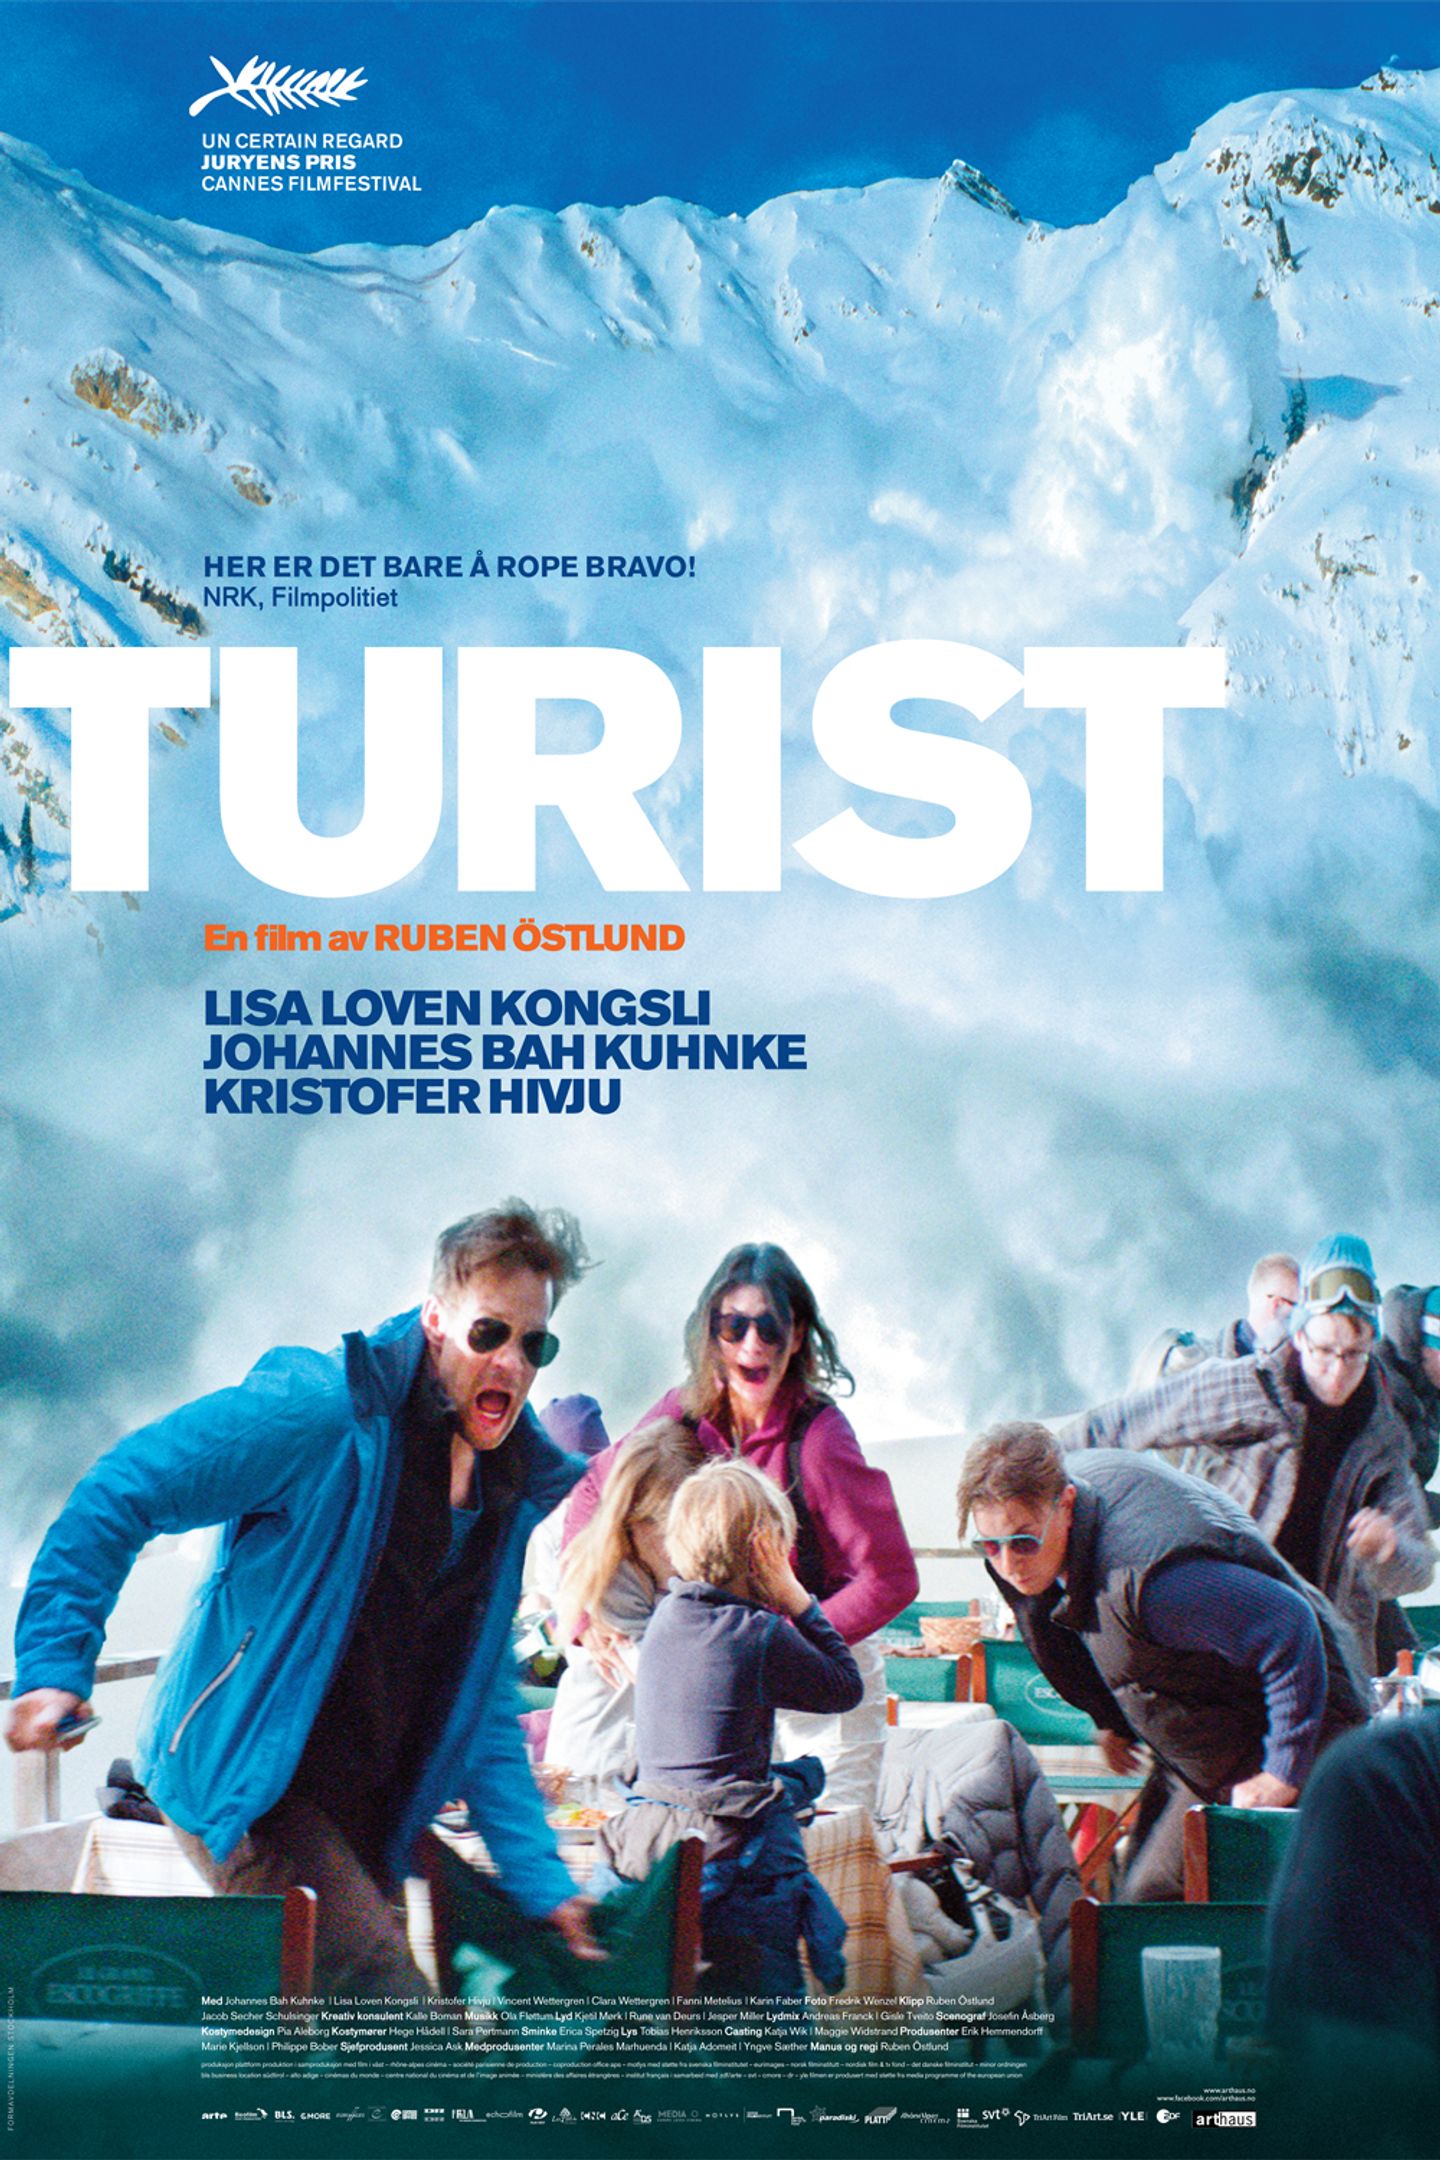 Plakat for 'Turist'